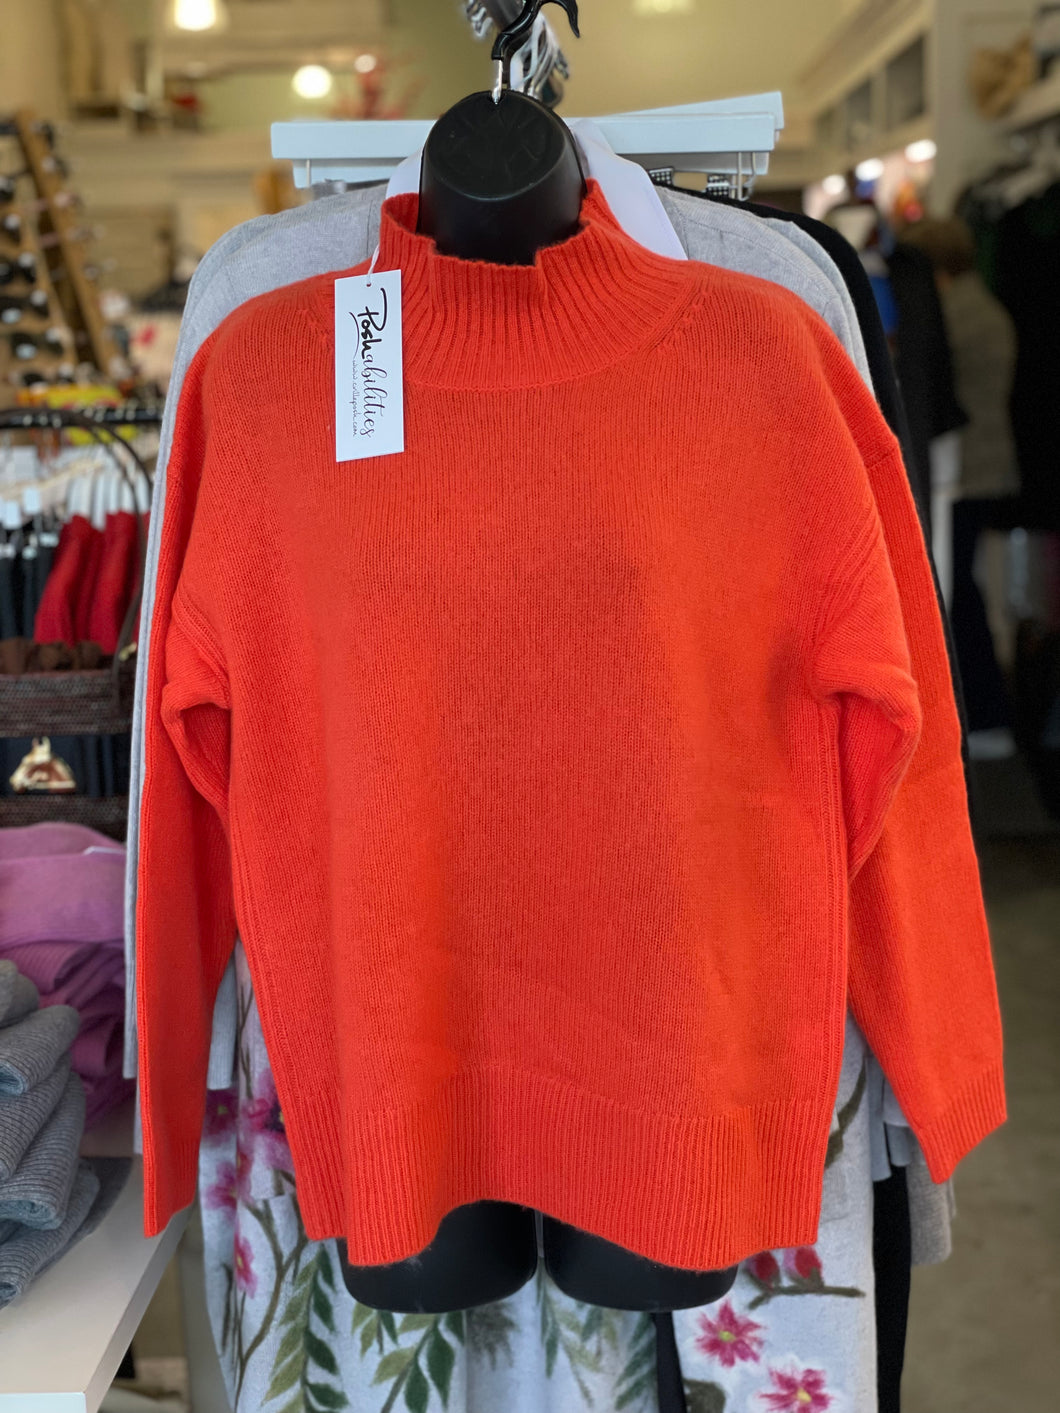 Mock Turtle Neck Cashmere Sweater in Orange by Poshabilities